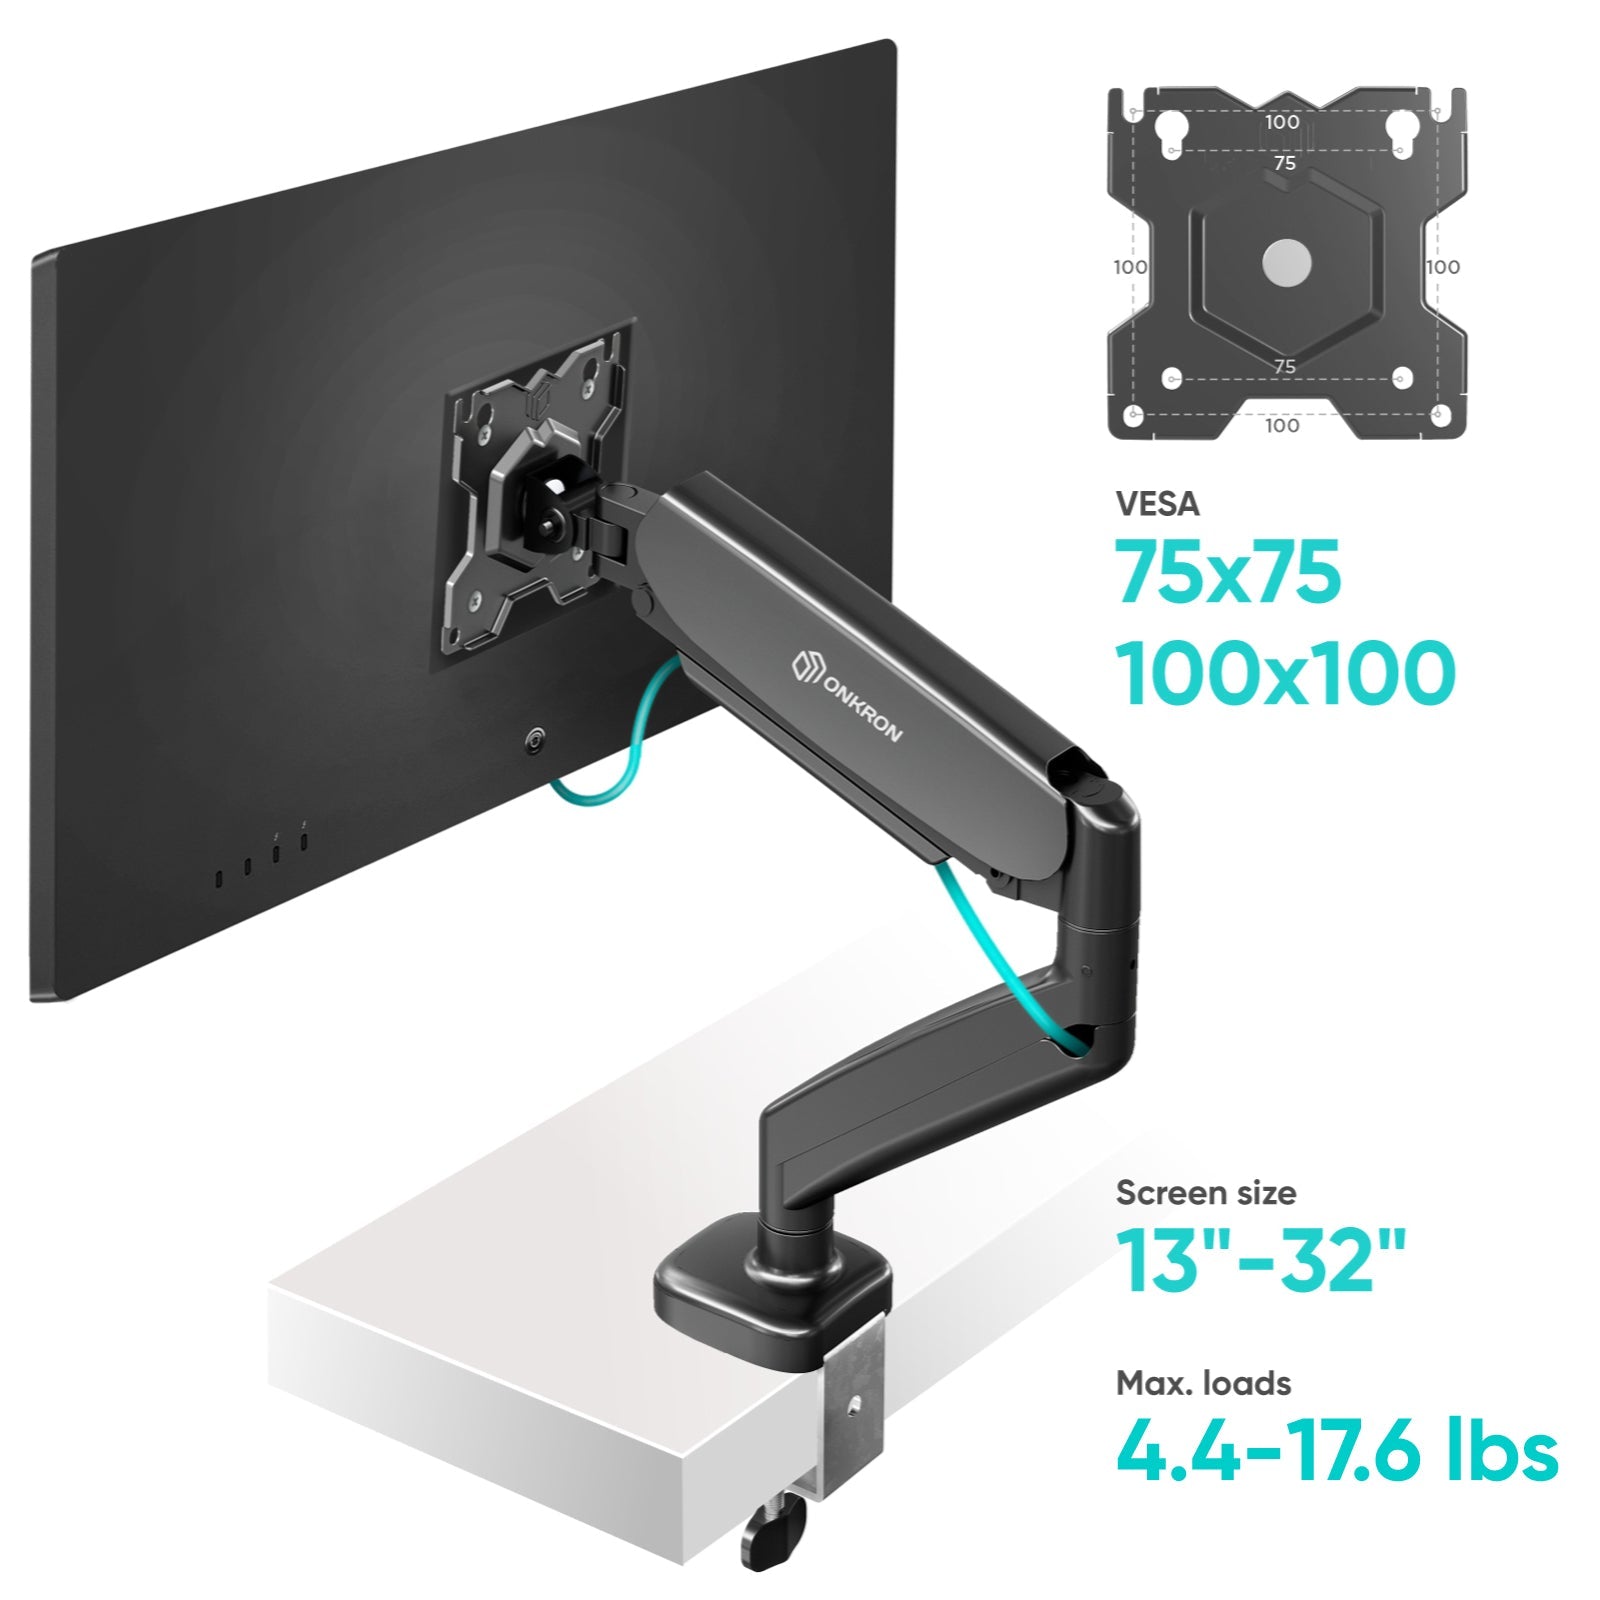 Monitor Arm Desktop Mount for 13”-32" Screens up to 17.6 lb. ONKRON G50, Black